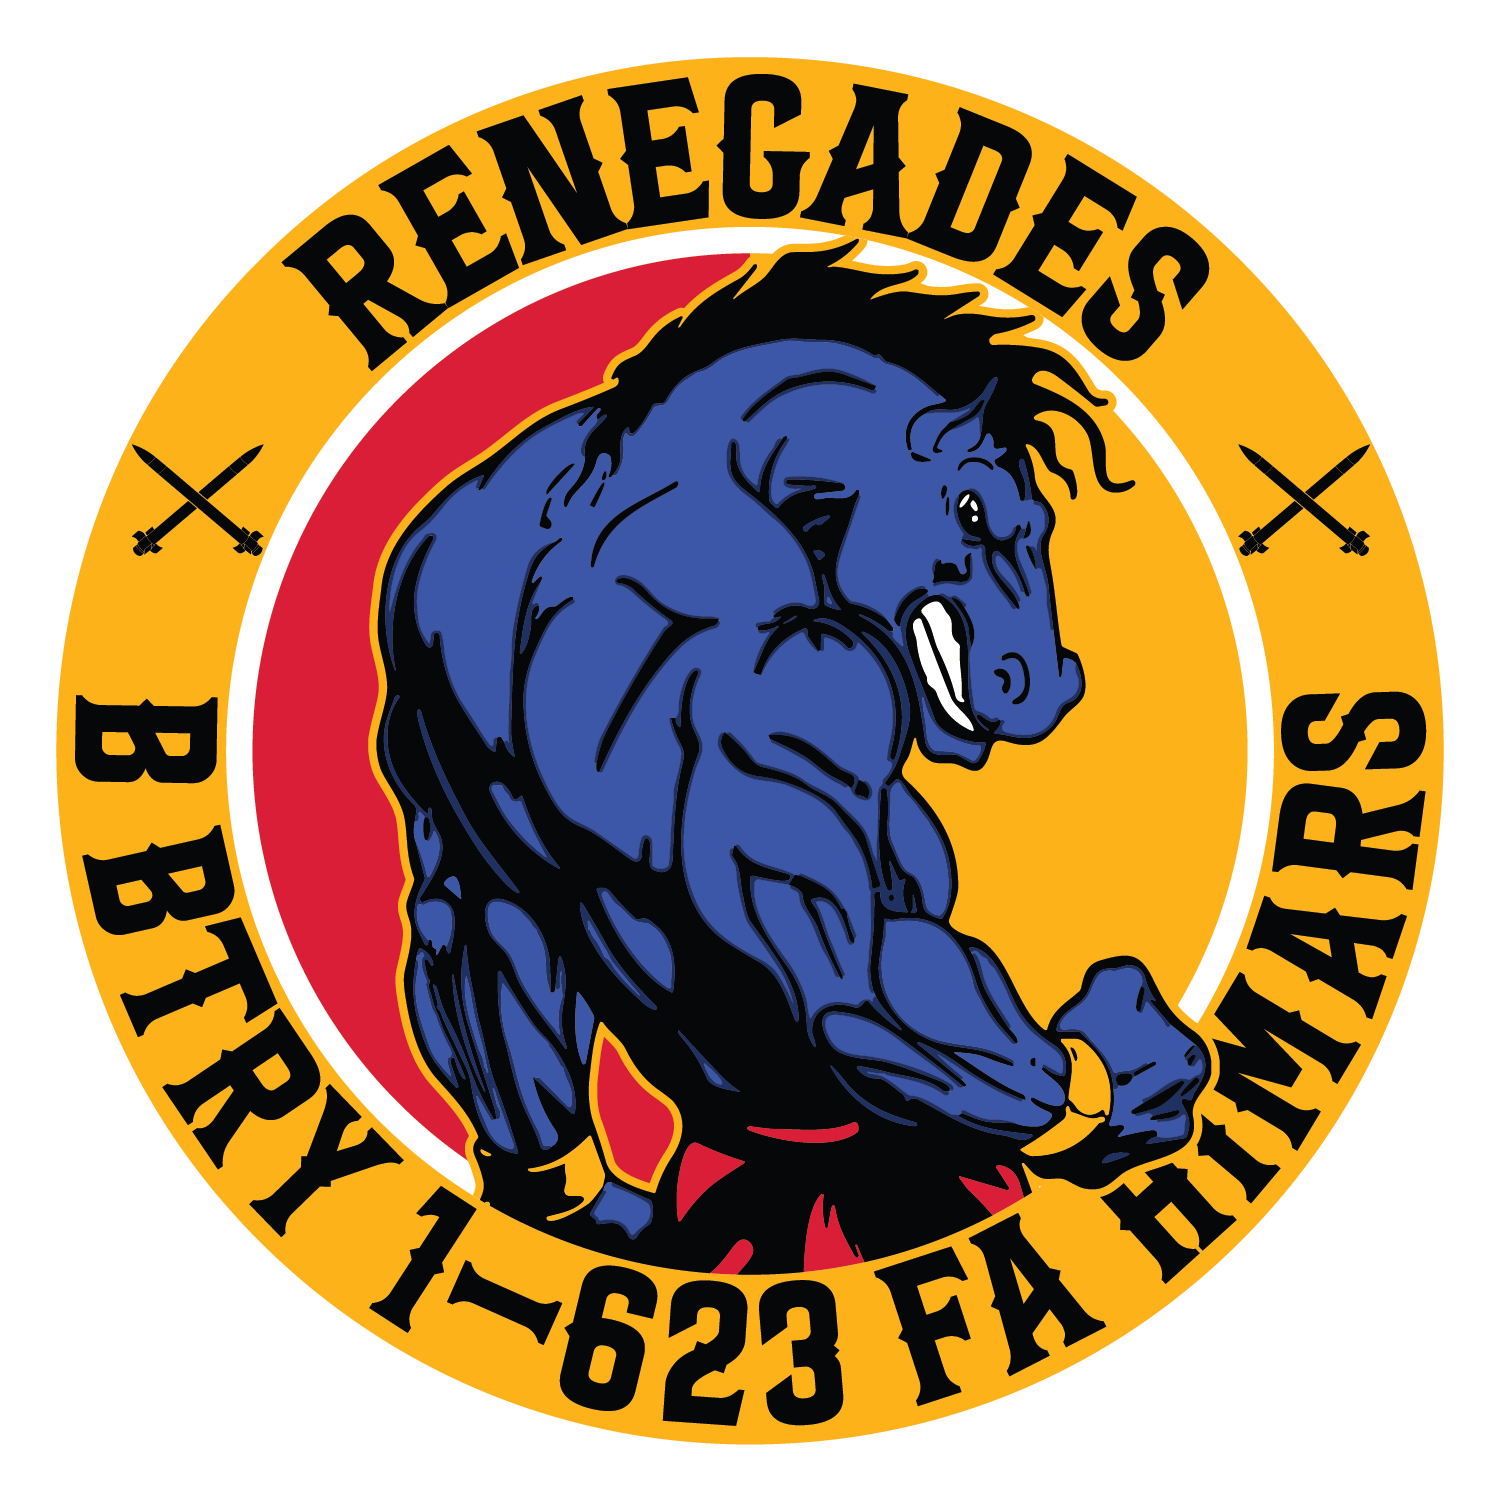 B BTRY, 1-623 "RENEGADES"